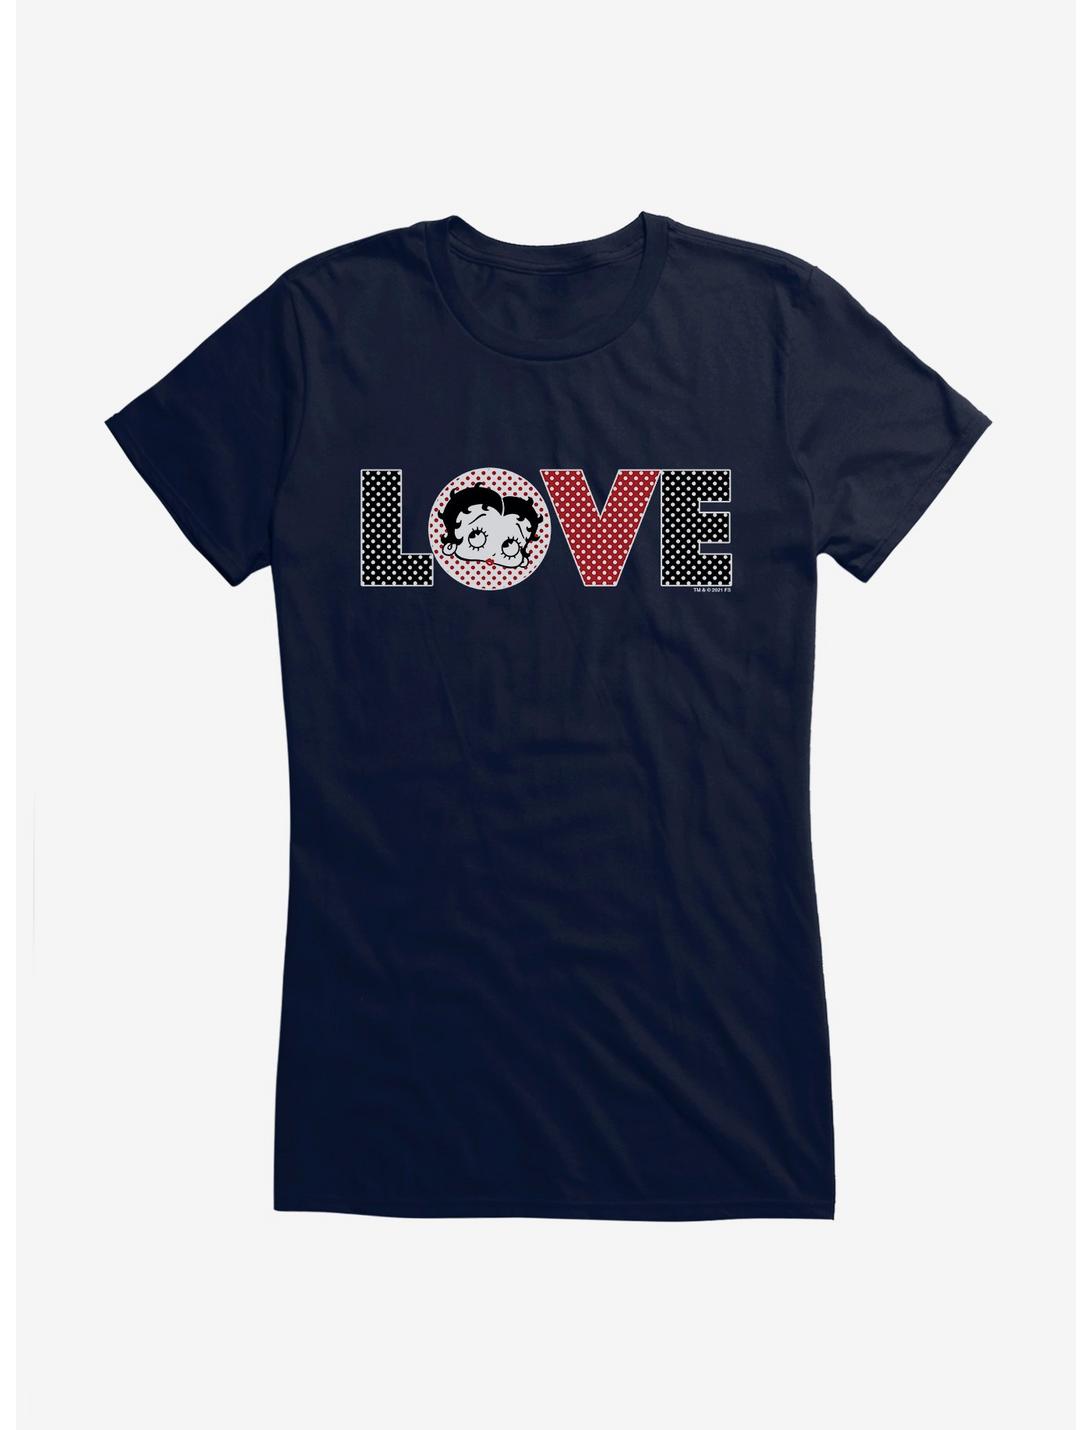 Betty Boop Polka Dot Love Girls T-Shirt, , hi-res